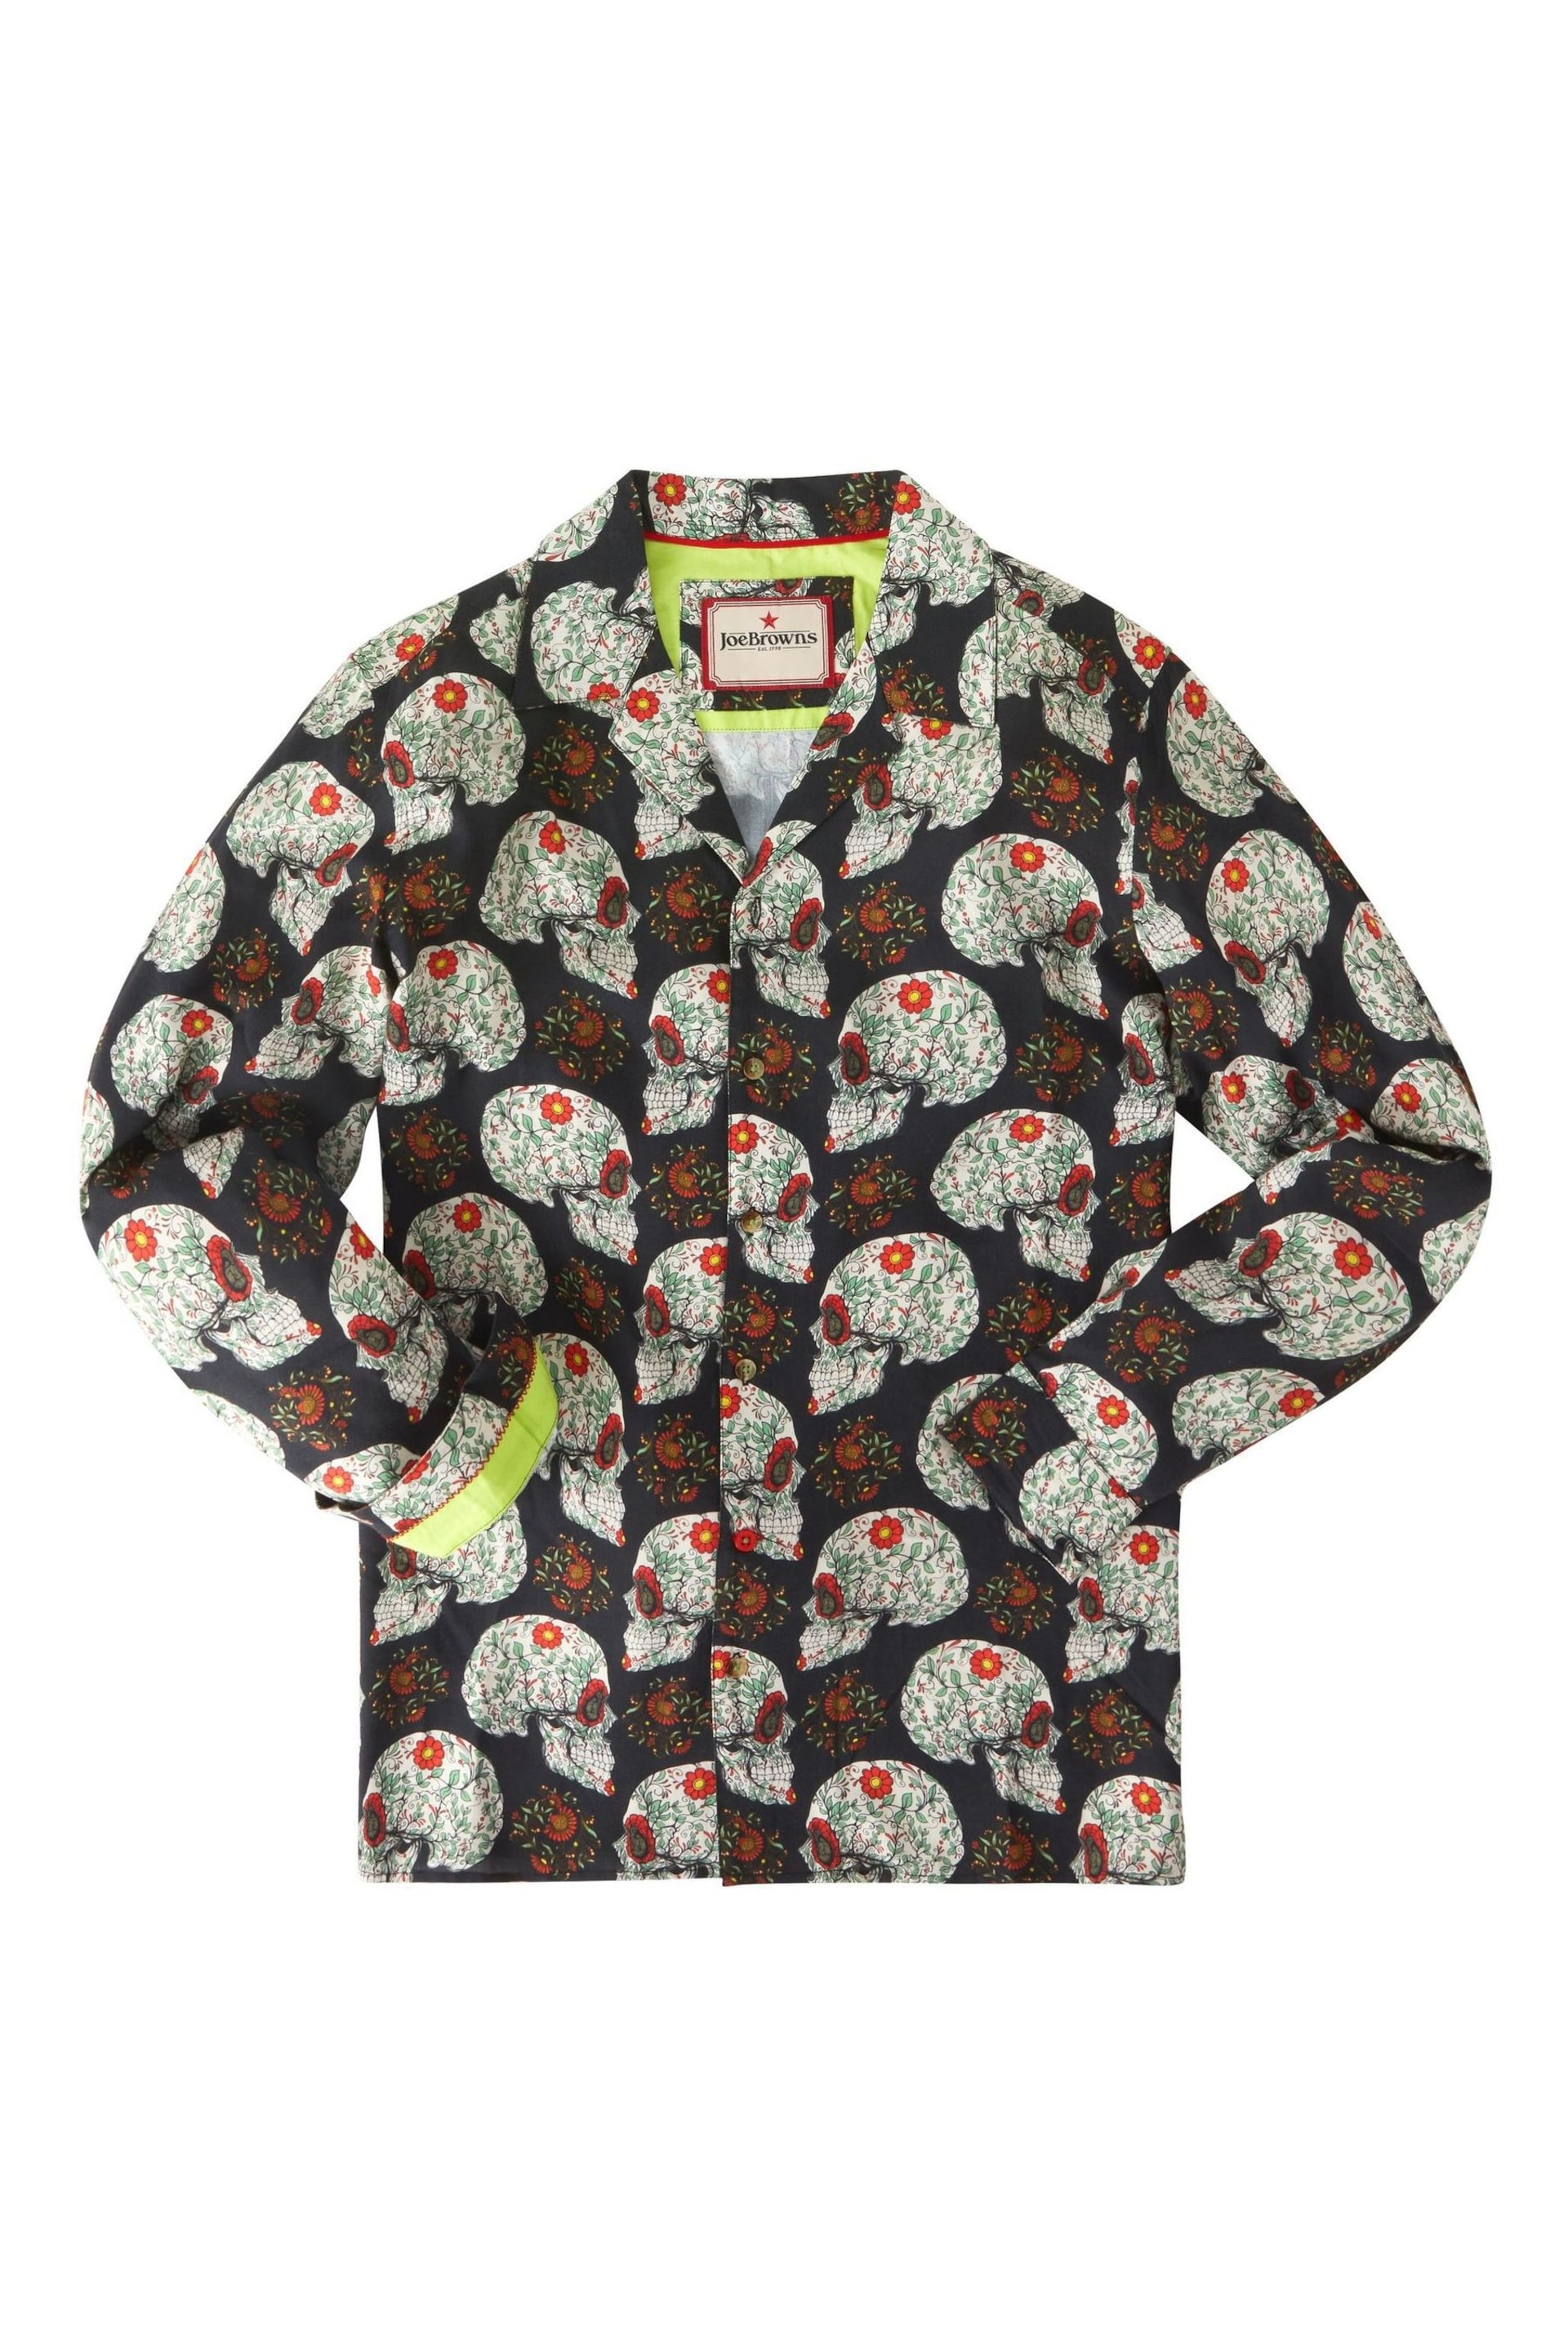 Joe Browns Black Skull Floral Long Sleeve Shirt - Image 5 of 5